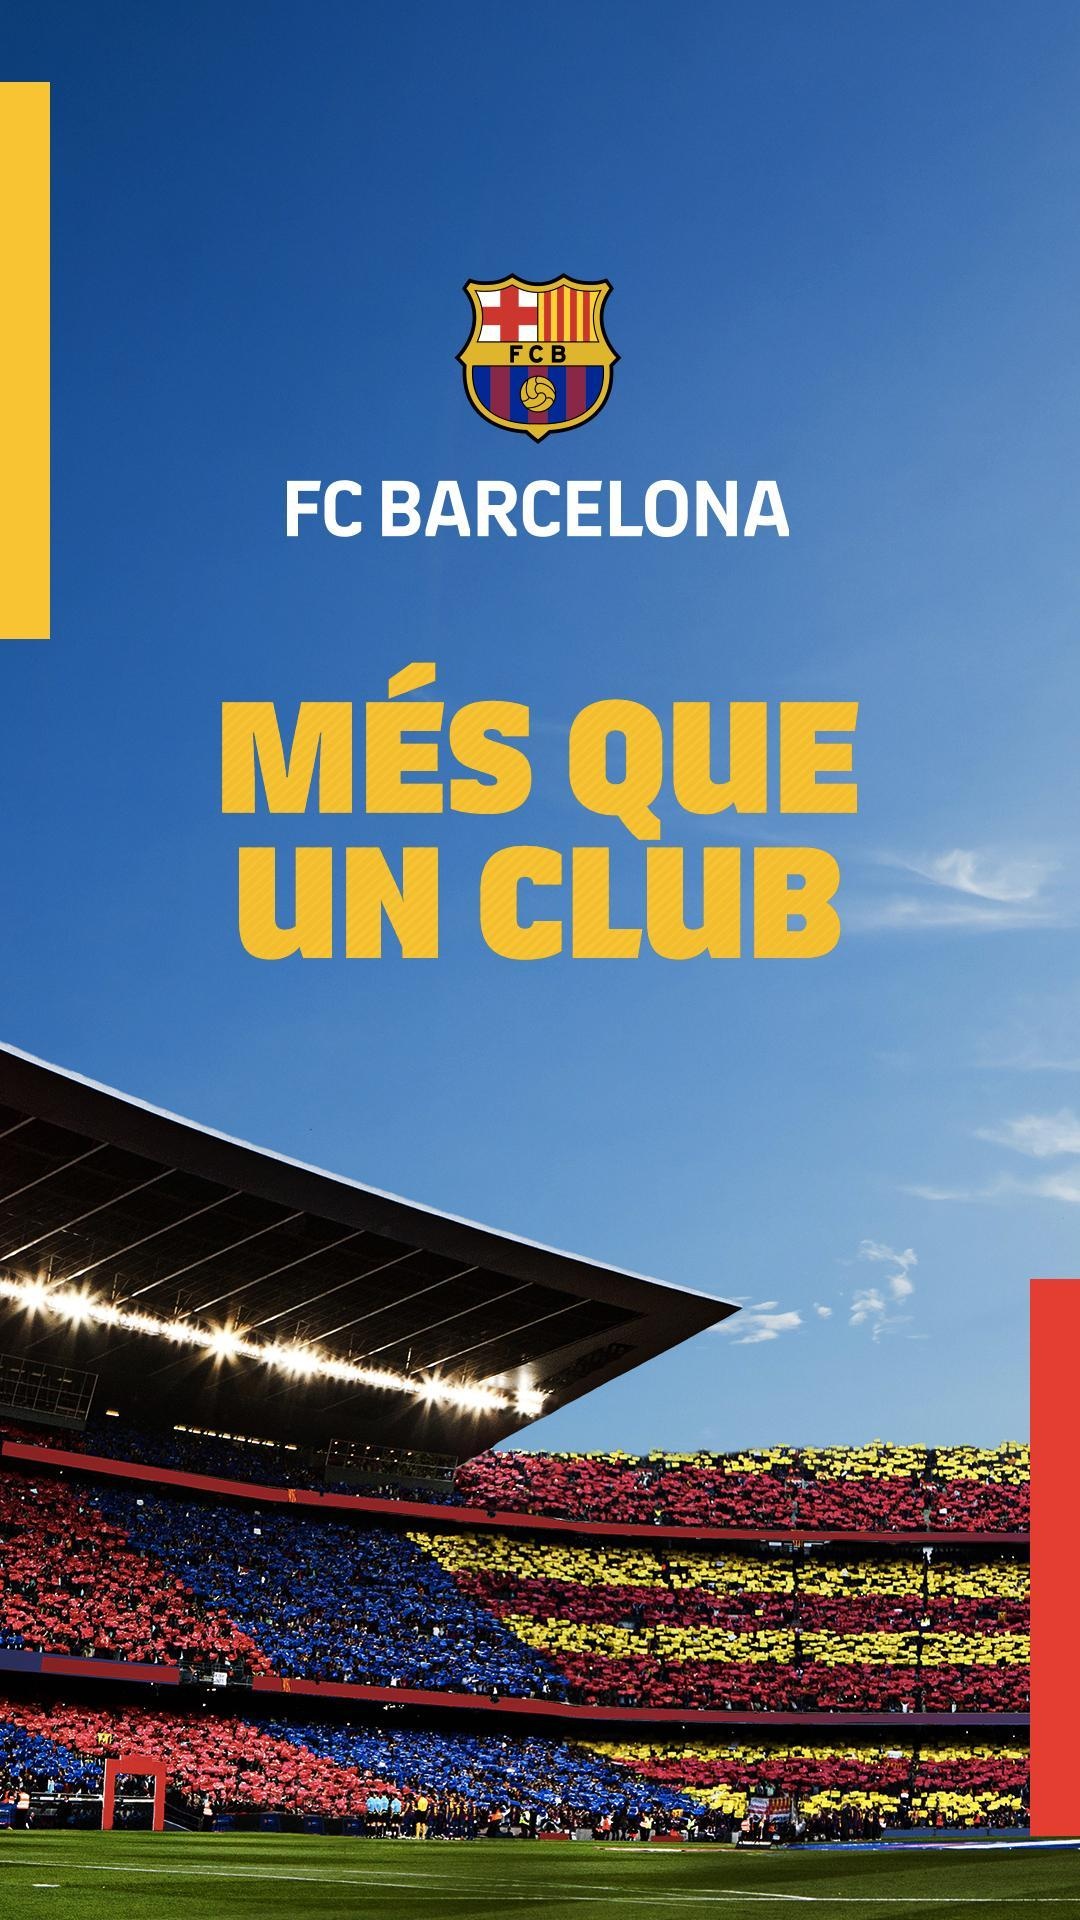 Camp Nou Stadium, Barcelona FC, iPhone wallpapers, Sports fandom, 1080x1920 Full HD Phone